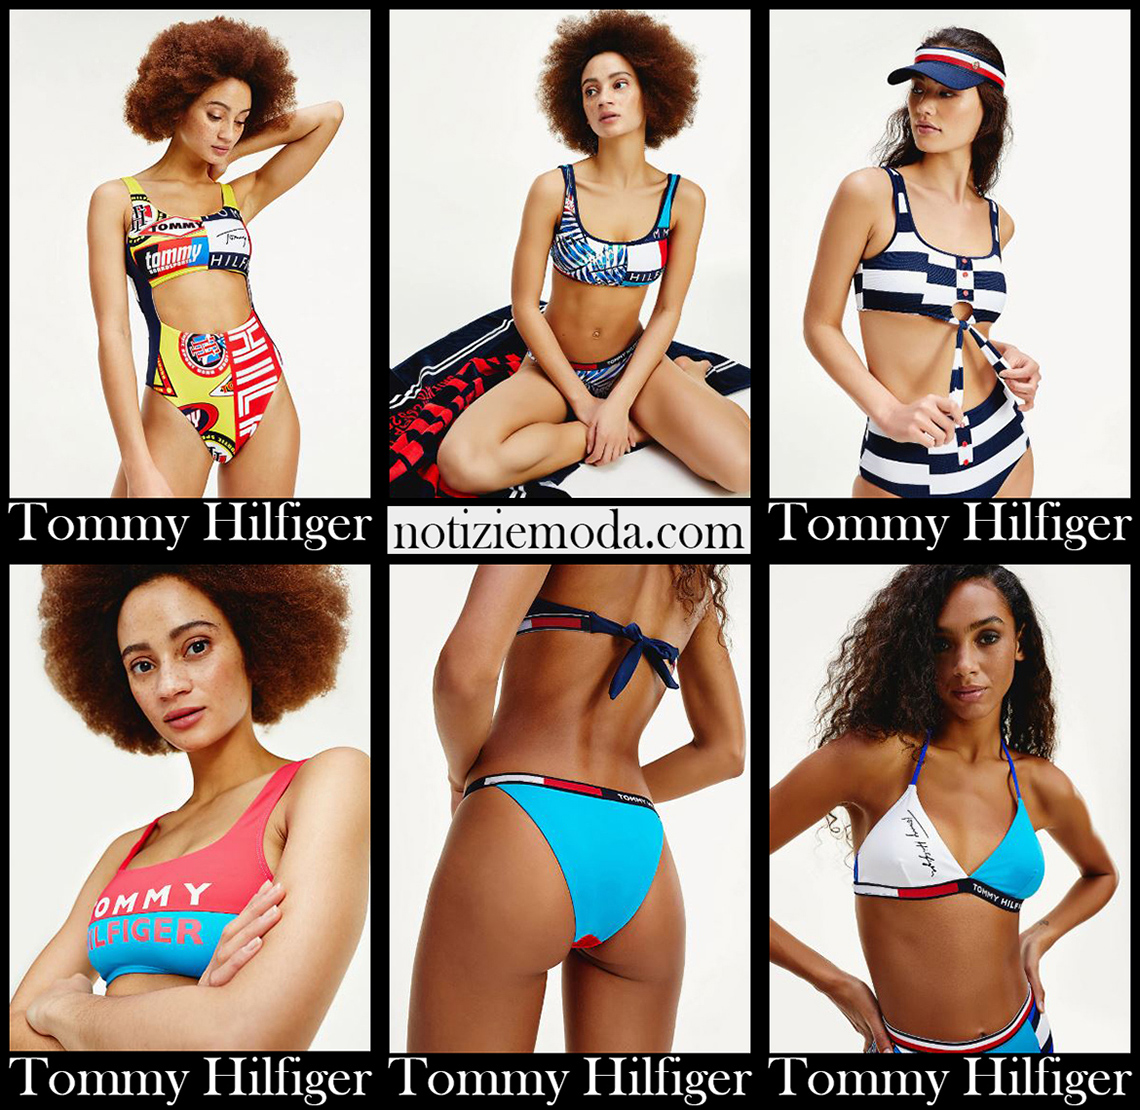 Bikini Tommy Hilfiger 2020 costumi da bagno donna